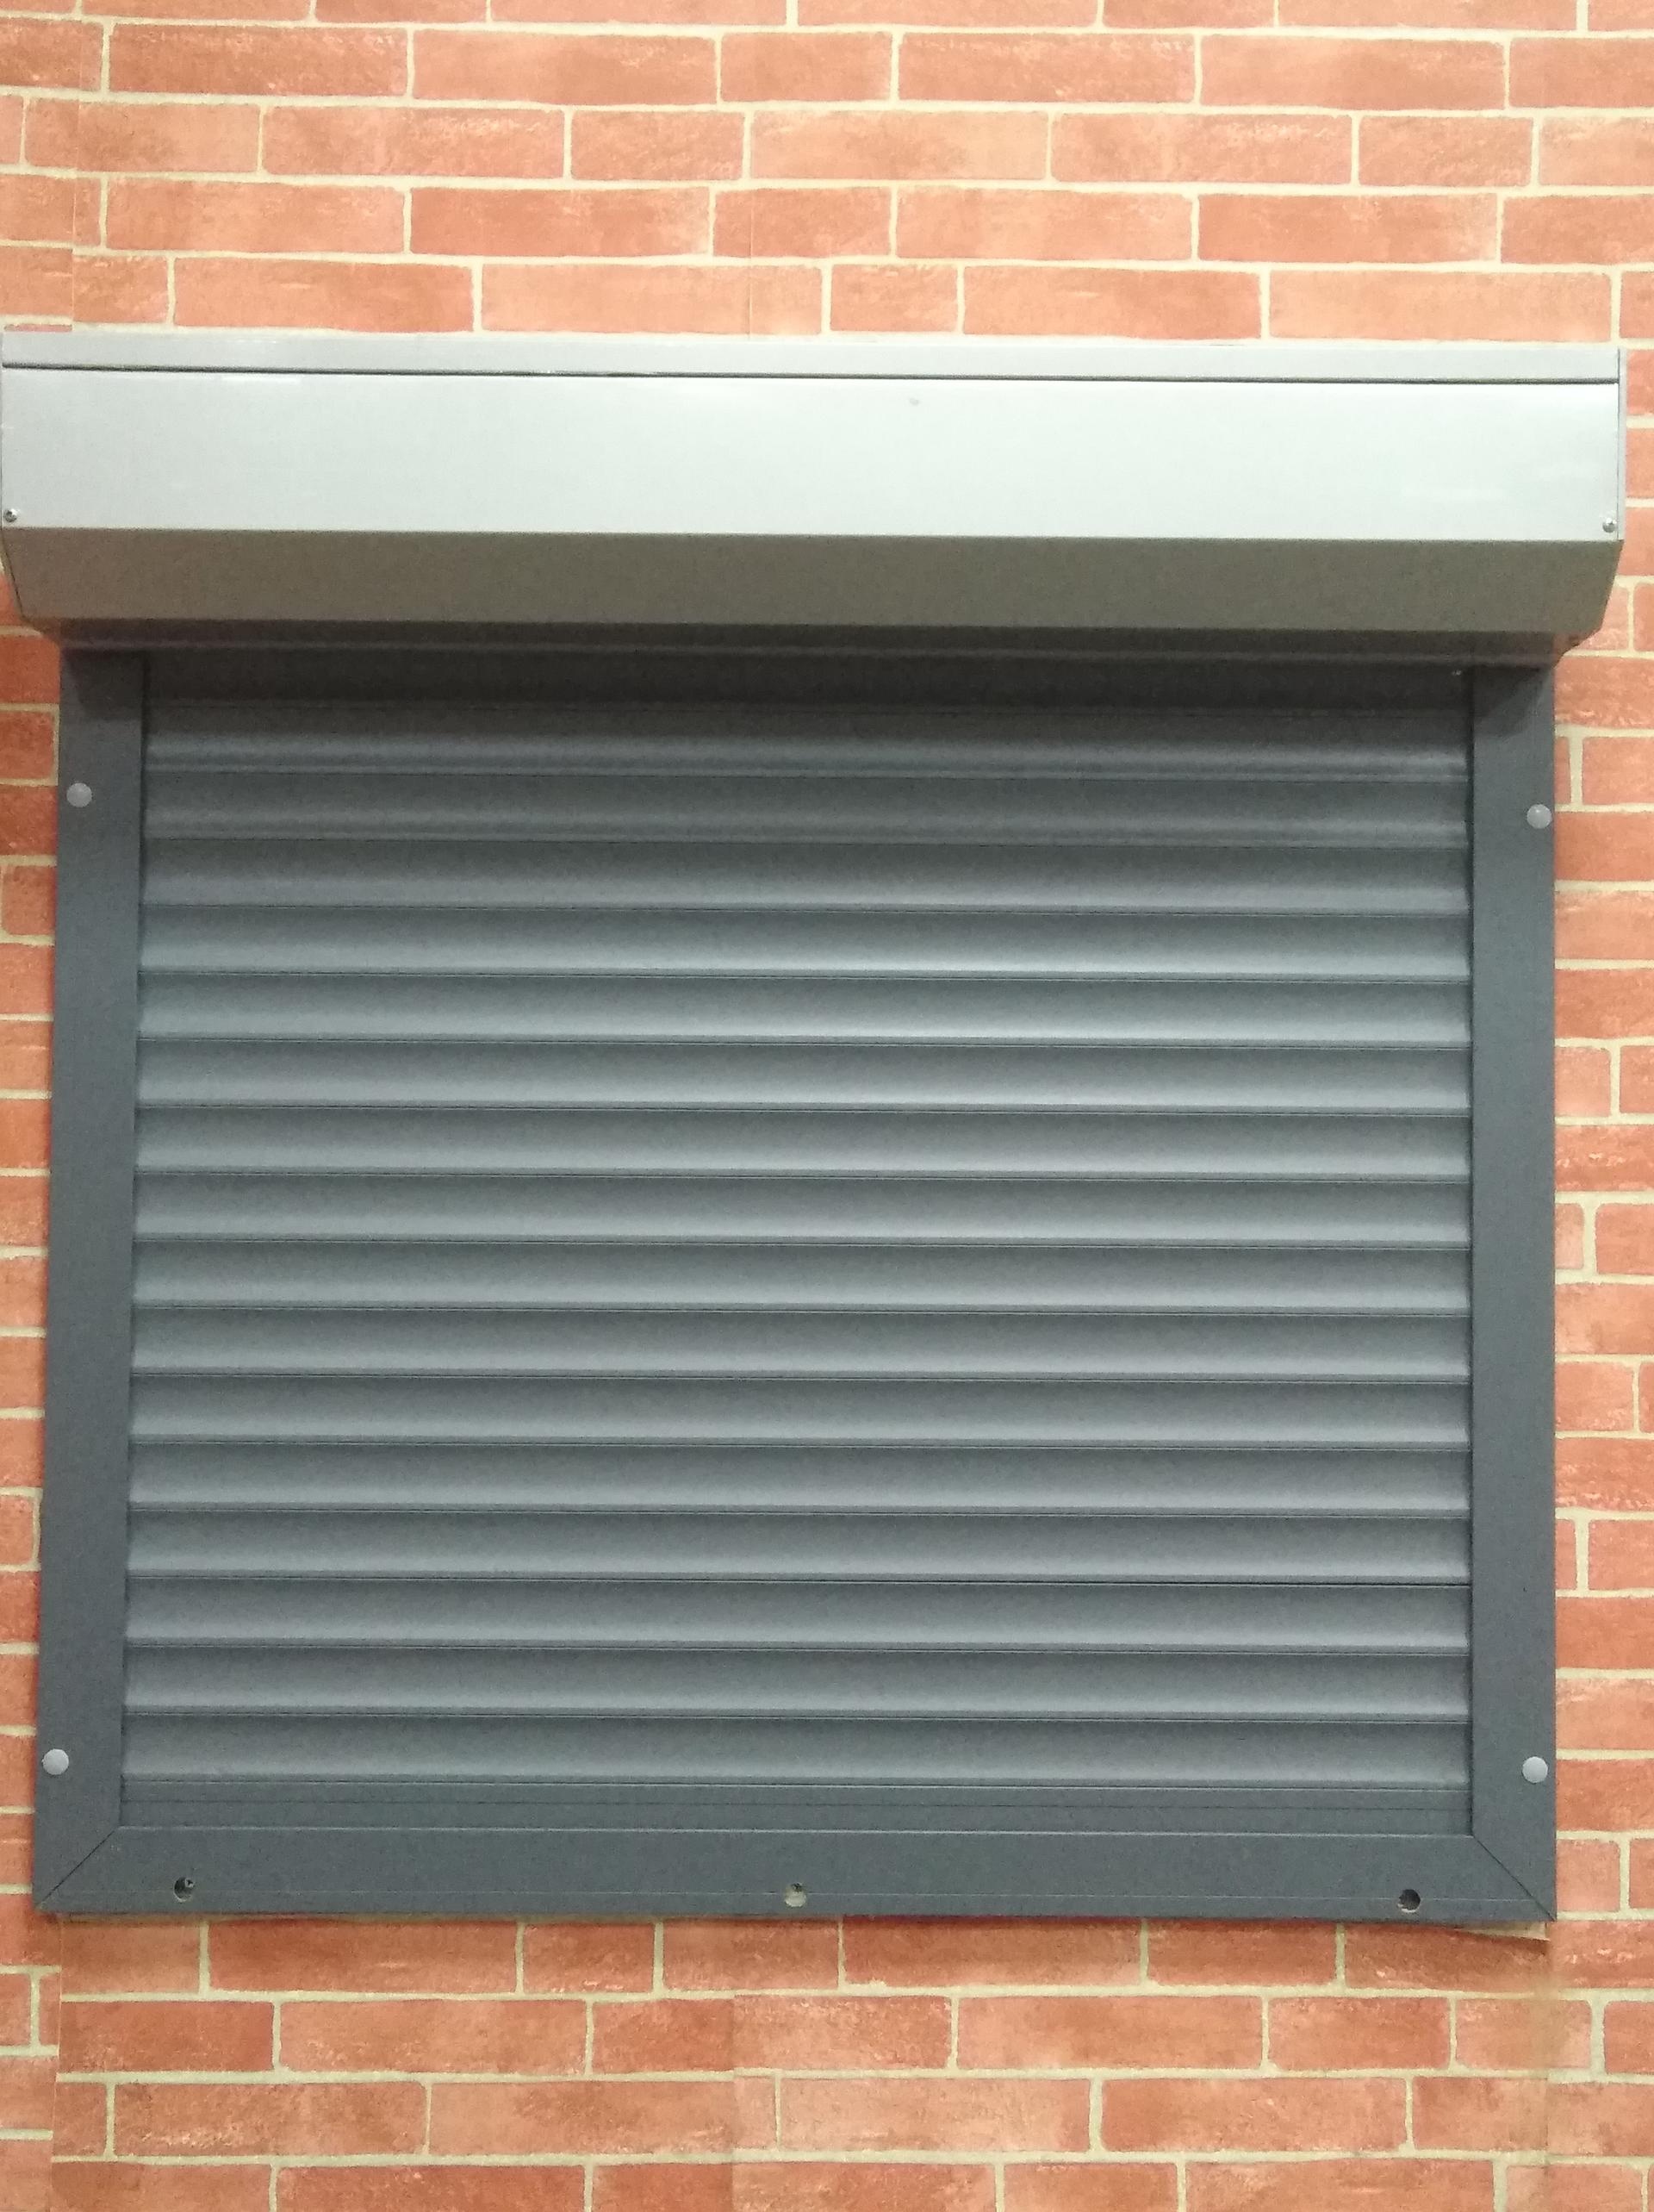 Thermal insulation Rollingshutter aluminum roller shutter exterior windows